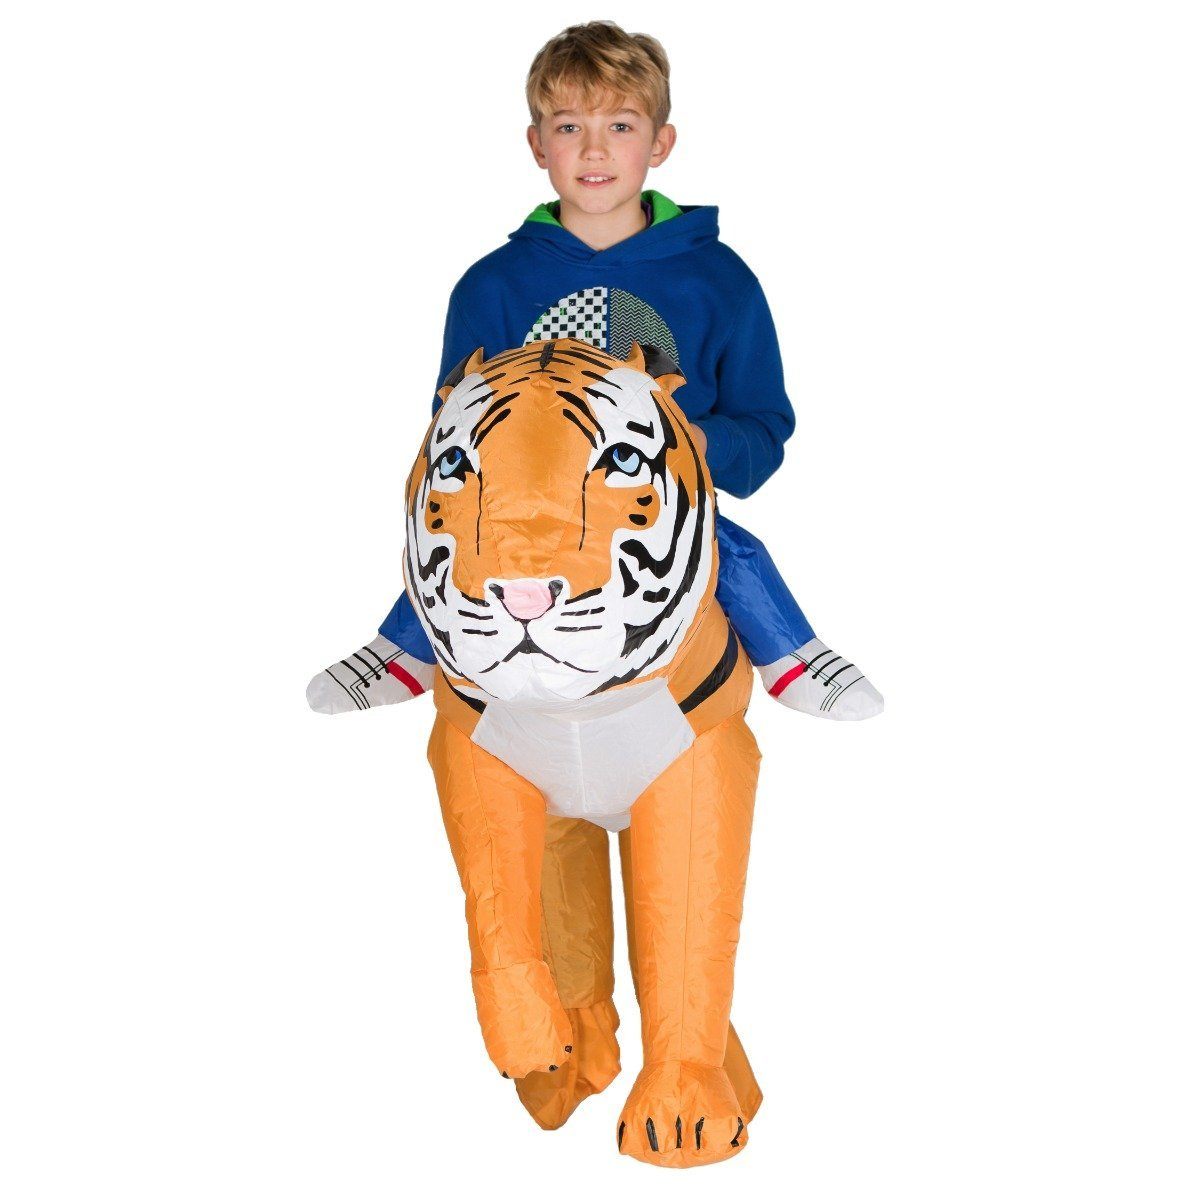 Fancy Dress - Kids Inflatable Tiger Costume